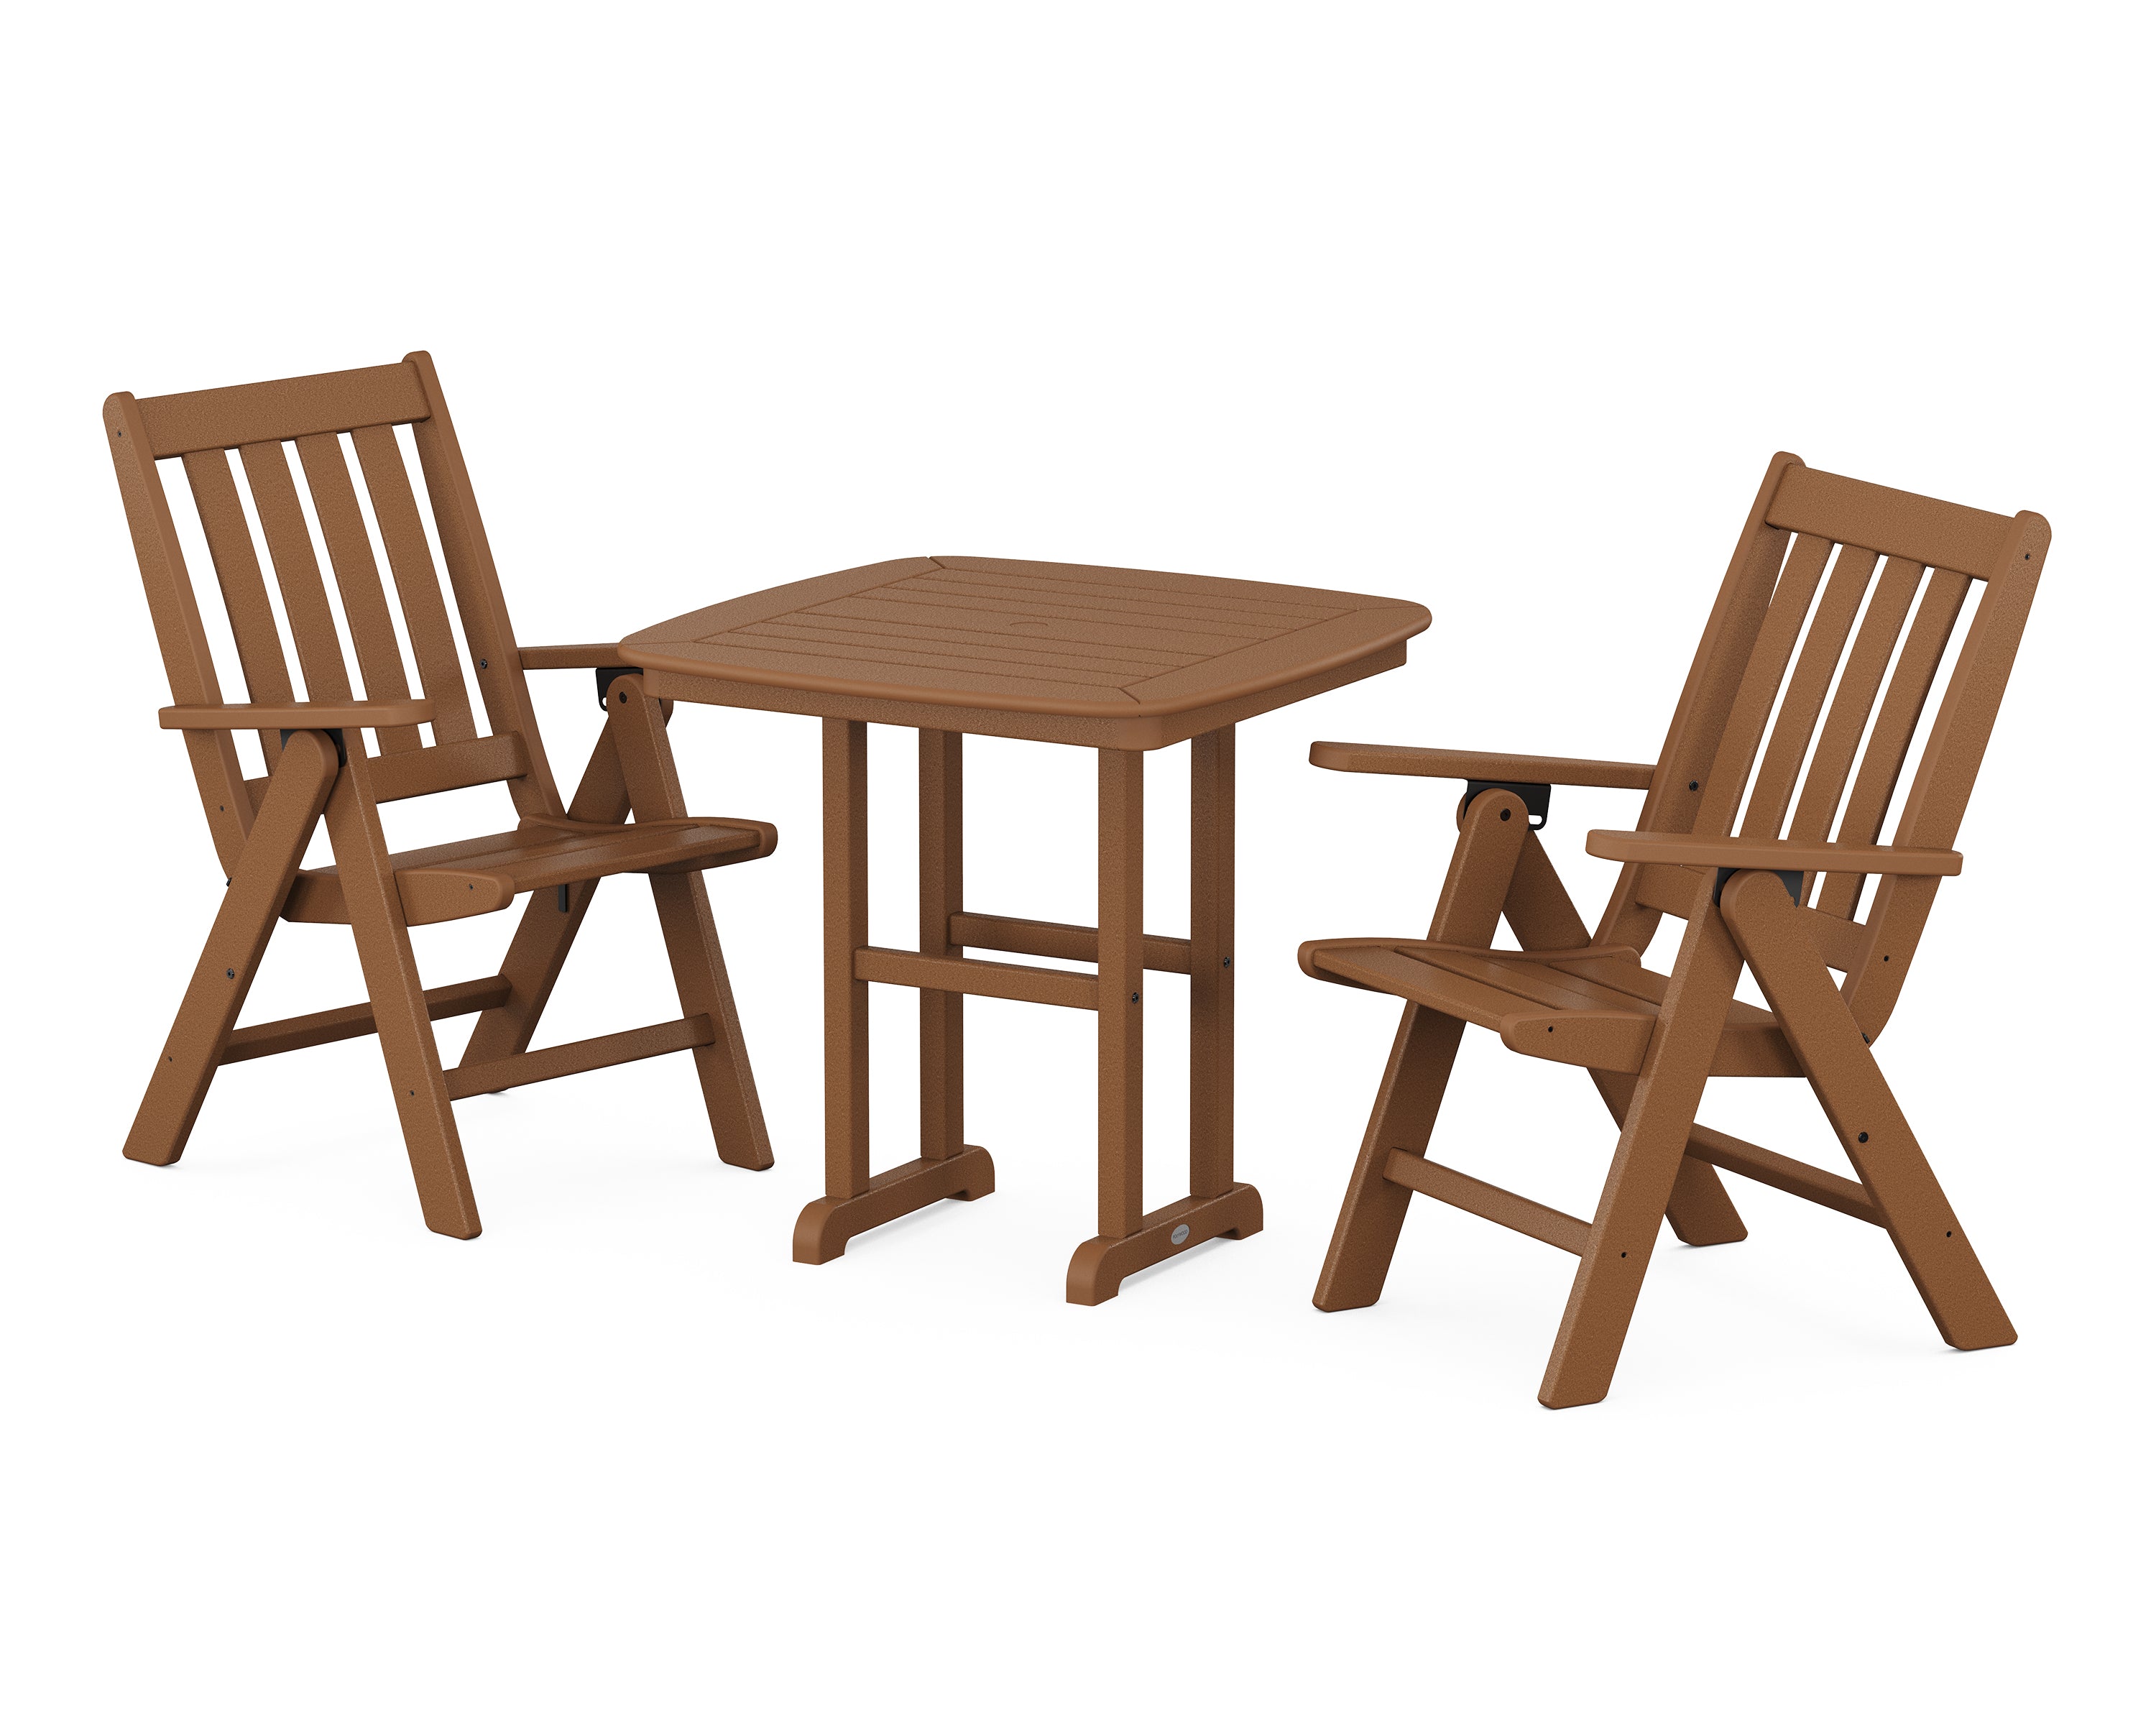 POLYWOOD® Vineyard Folding Chair 3-Piece Dining Set in Teak